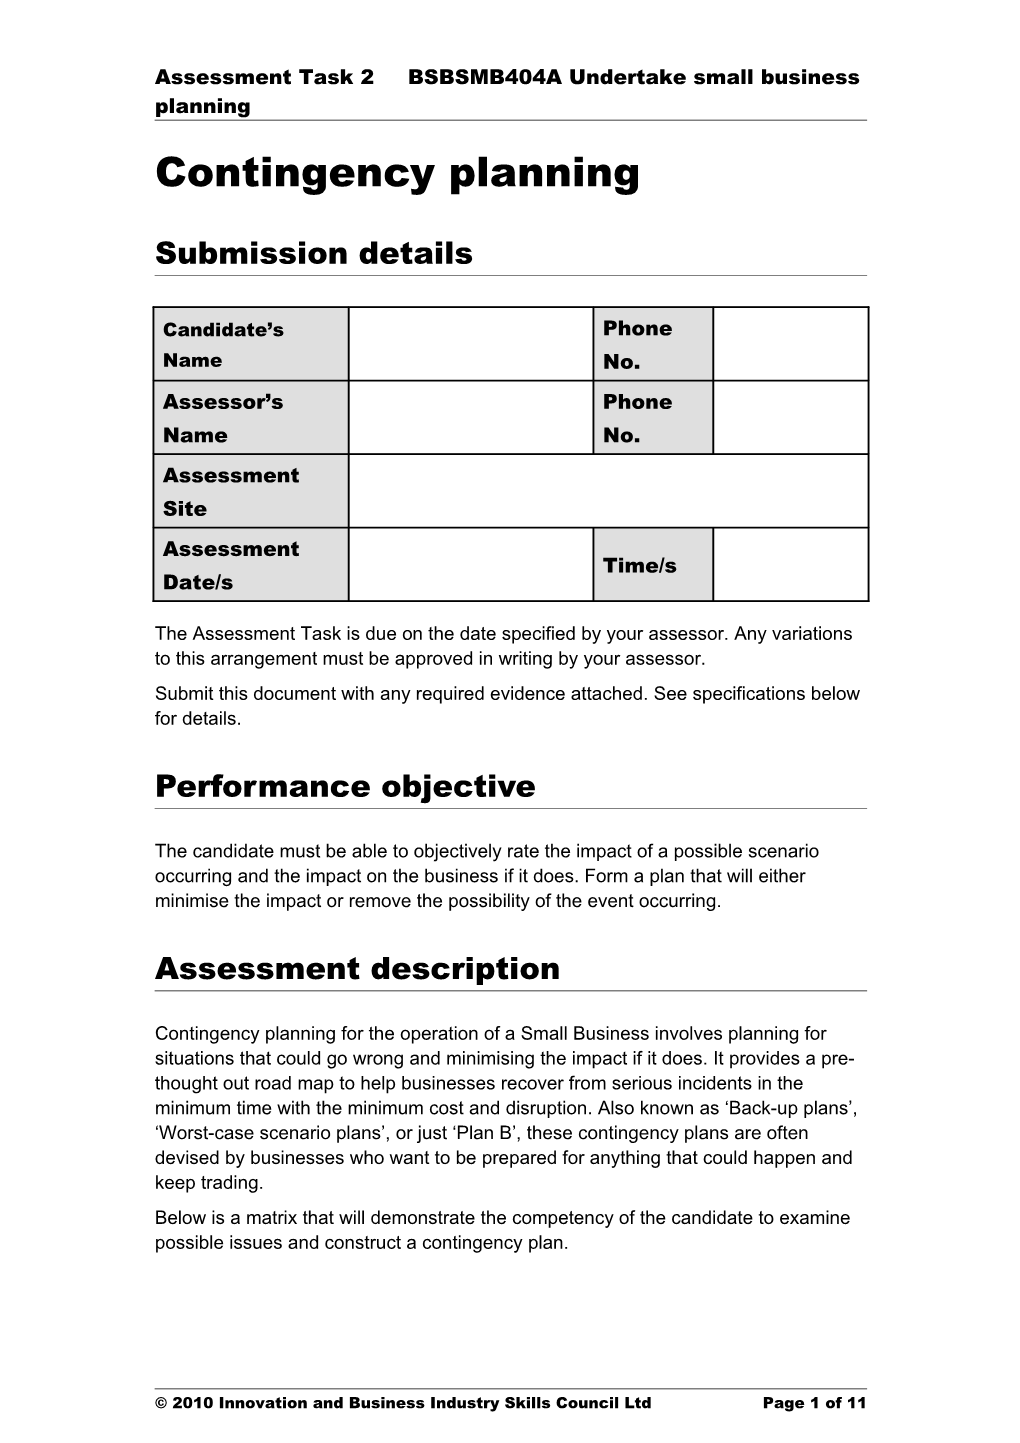 Assessment Task 2 BSBSMB404A Undertake Small Business Planning